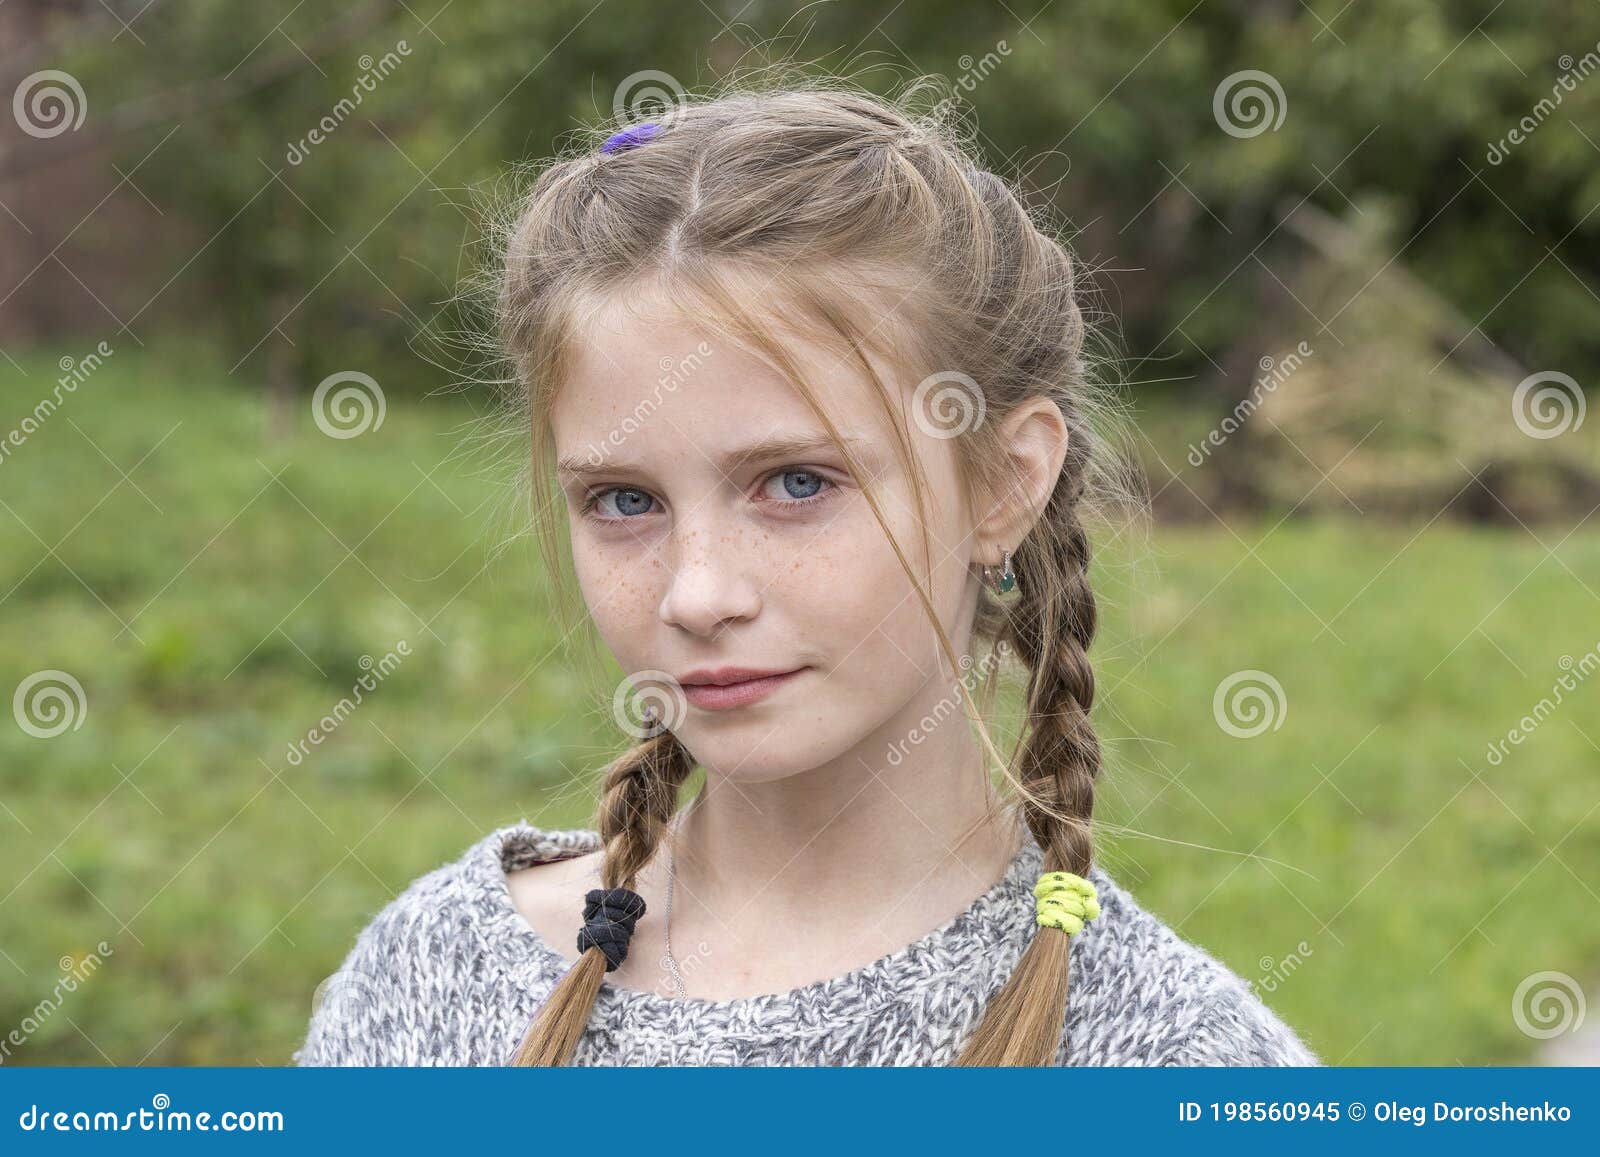 3. Blonde Teen Girl Portrait - wide 5